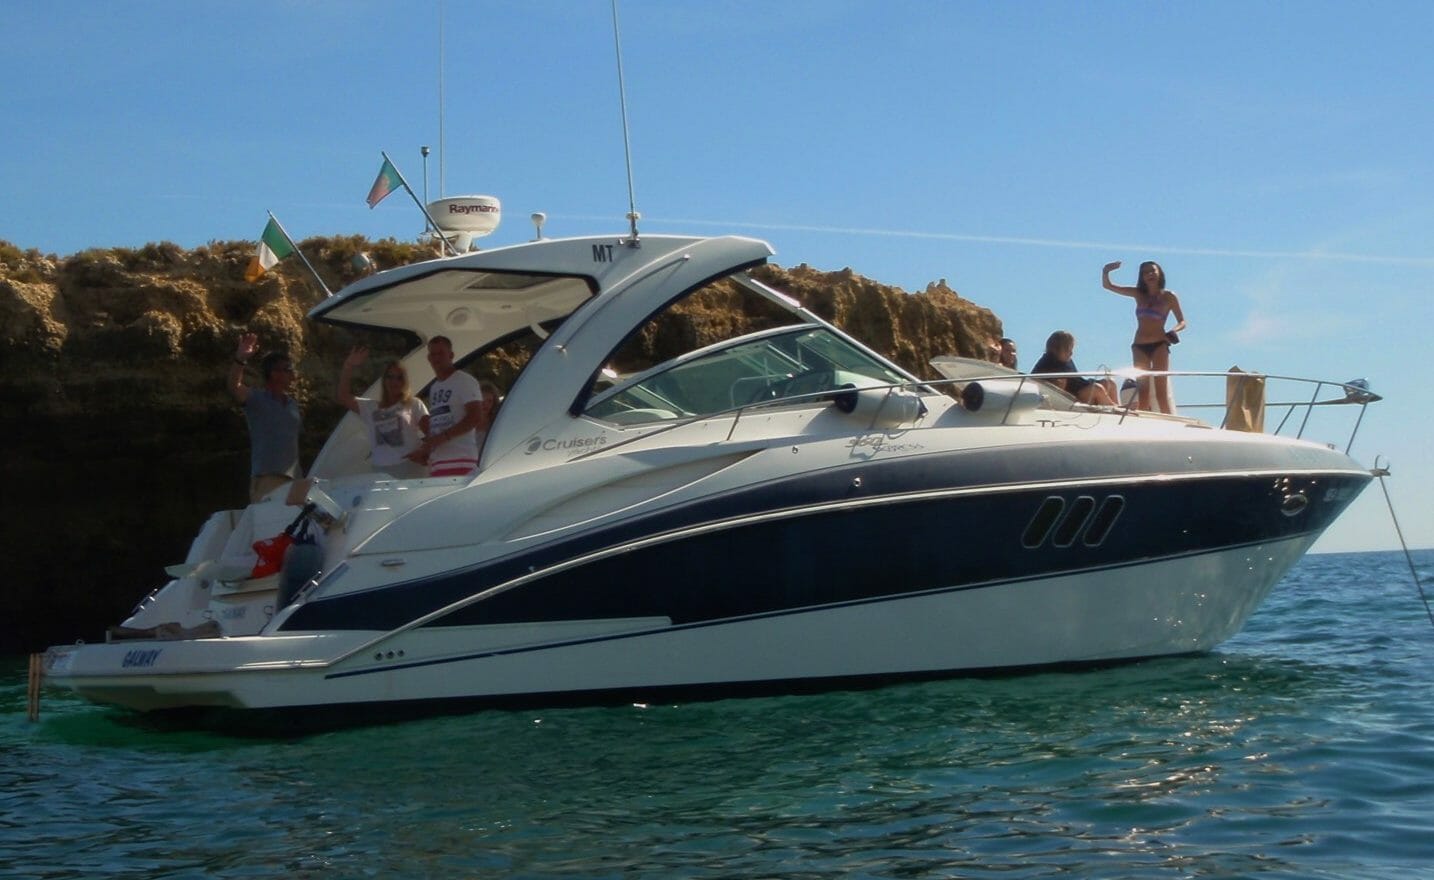 Algarve-luxury-charter-vilamoura-majestic-36-cruiser-1-1434x880